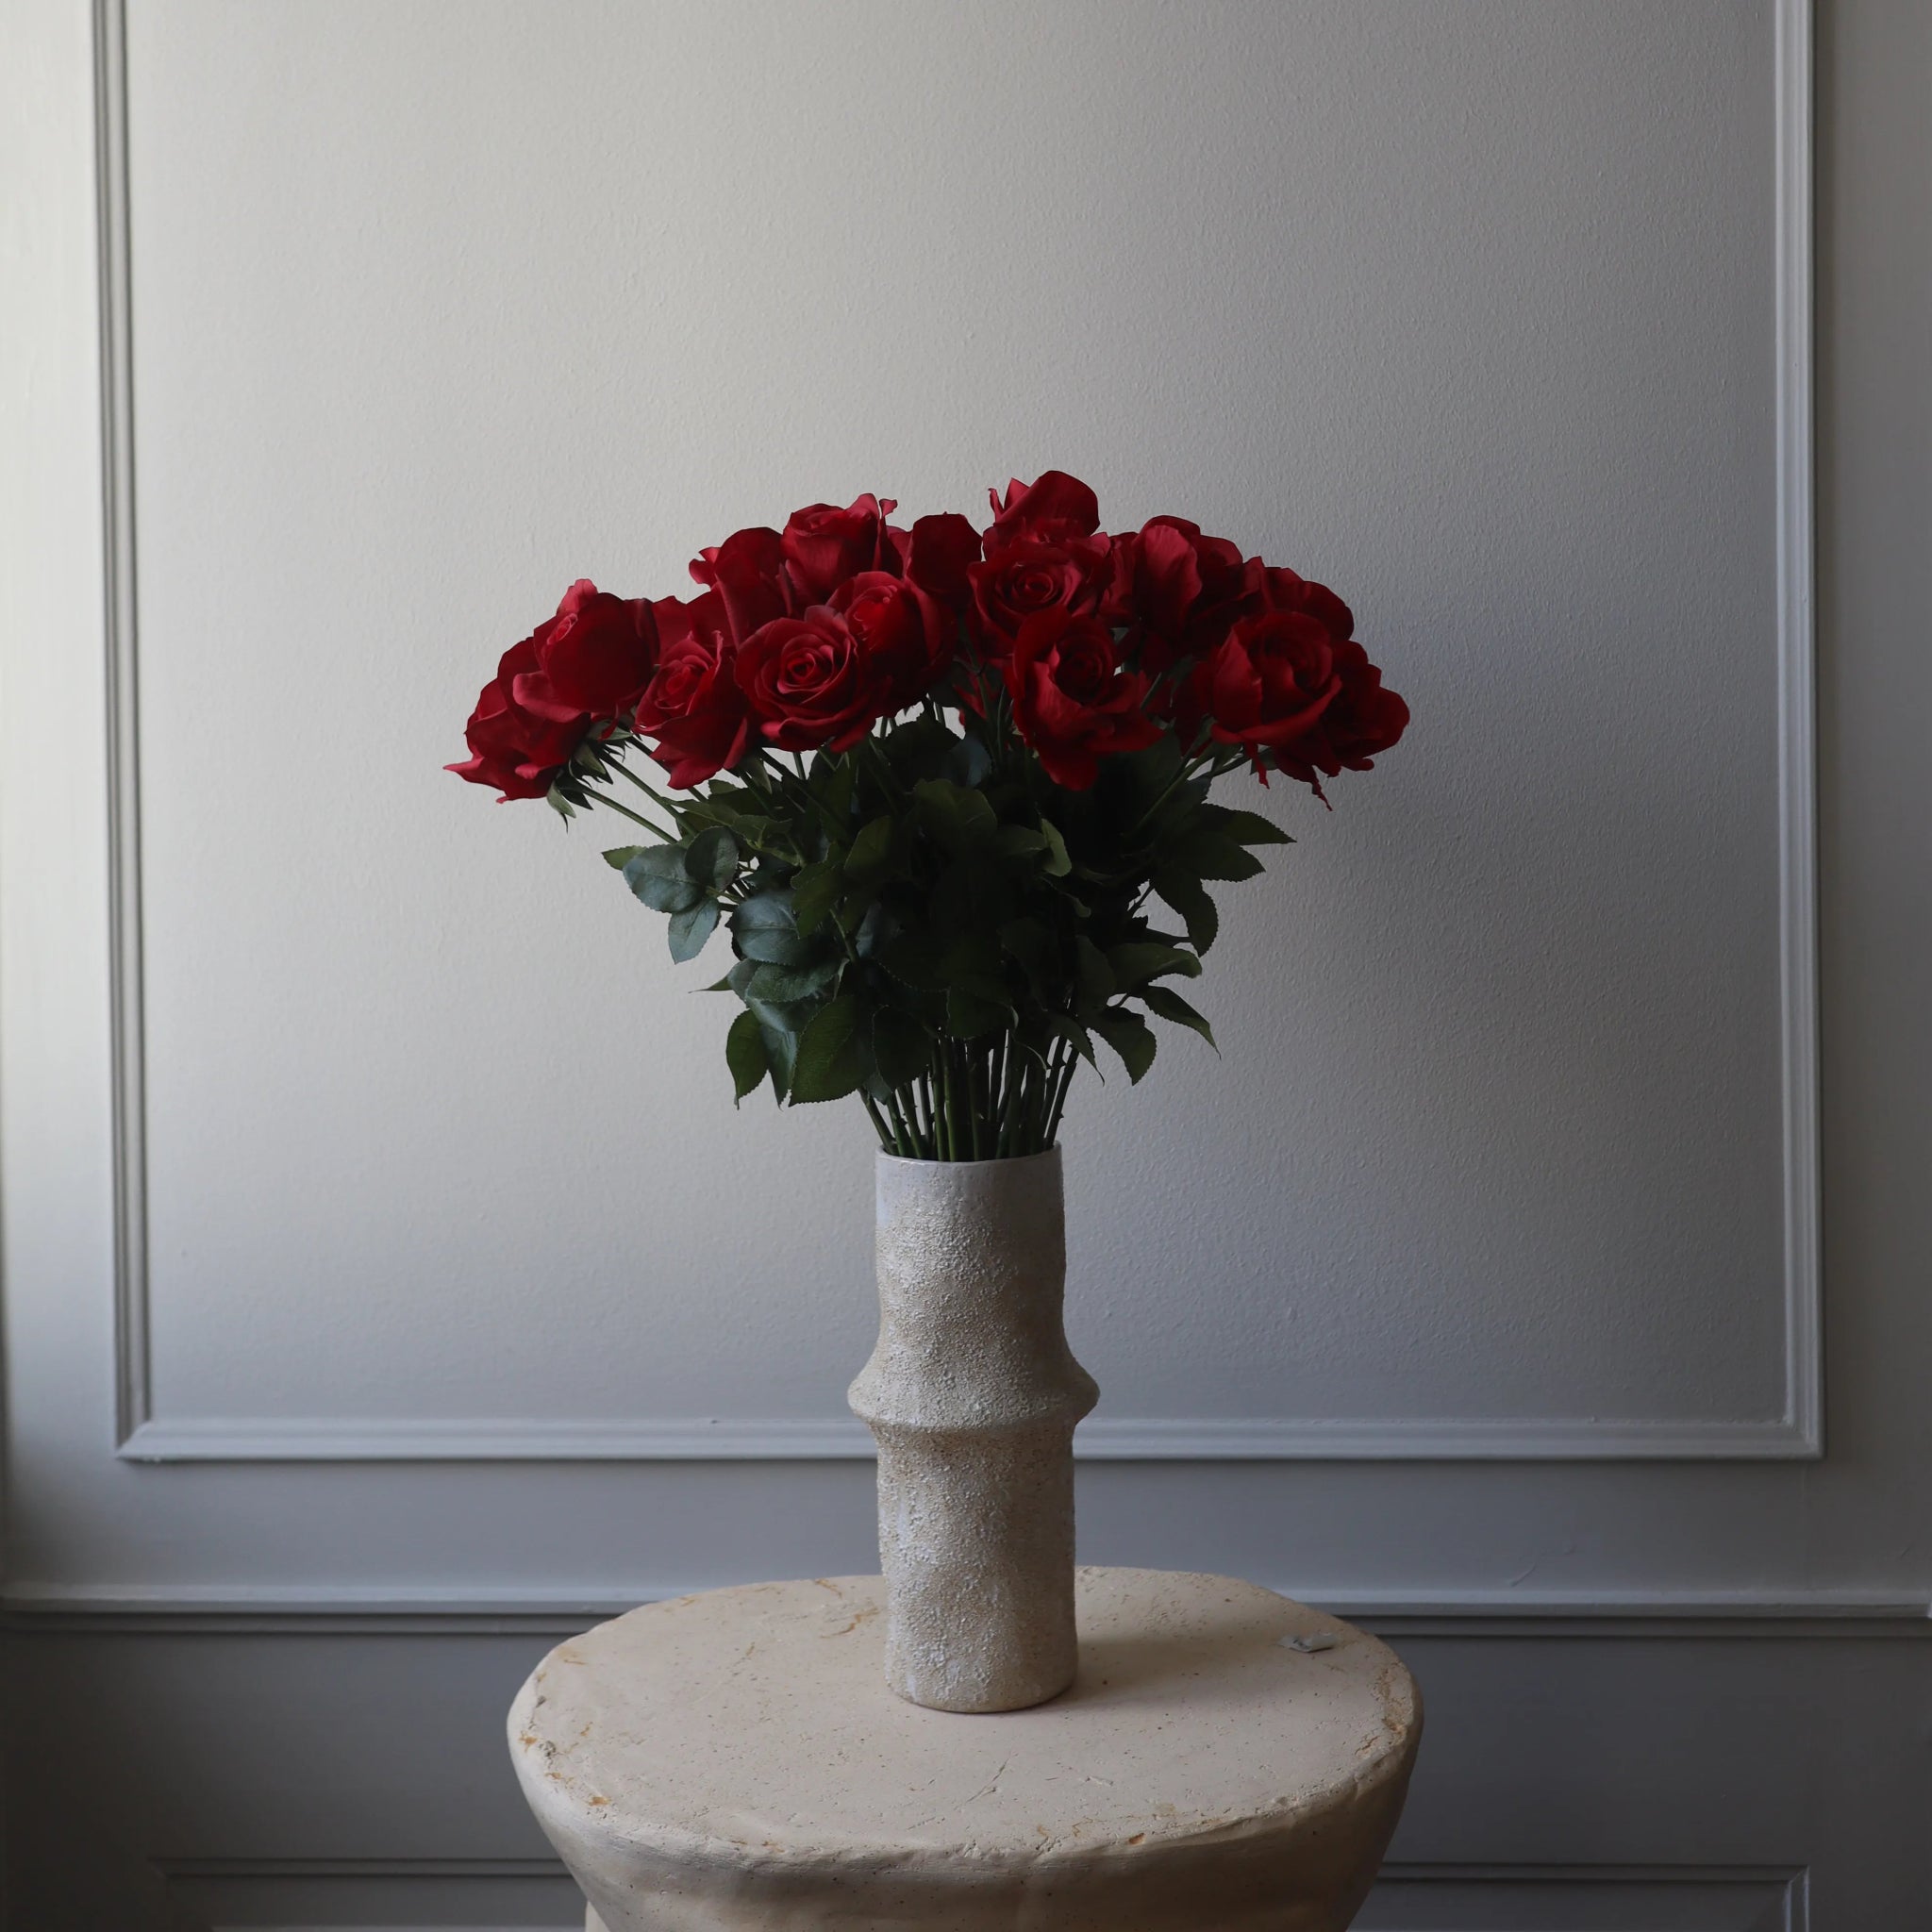 Premium Longstem Rose in Red from Botané